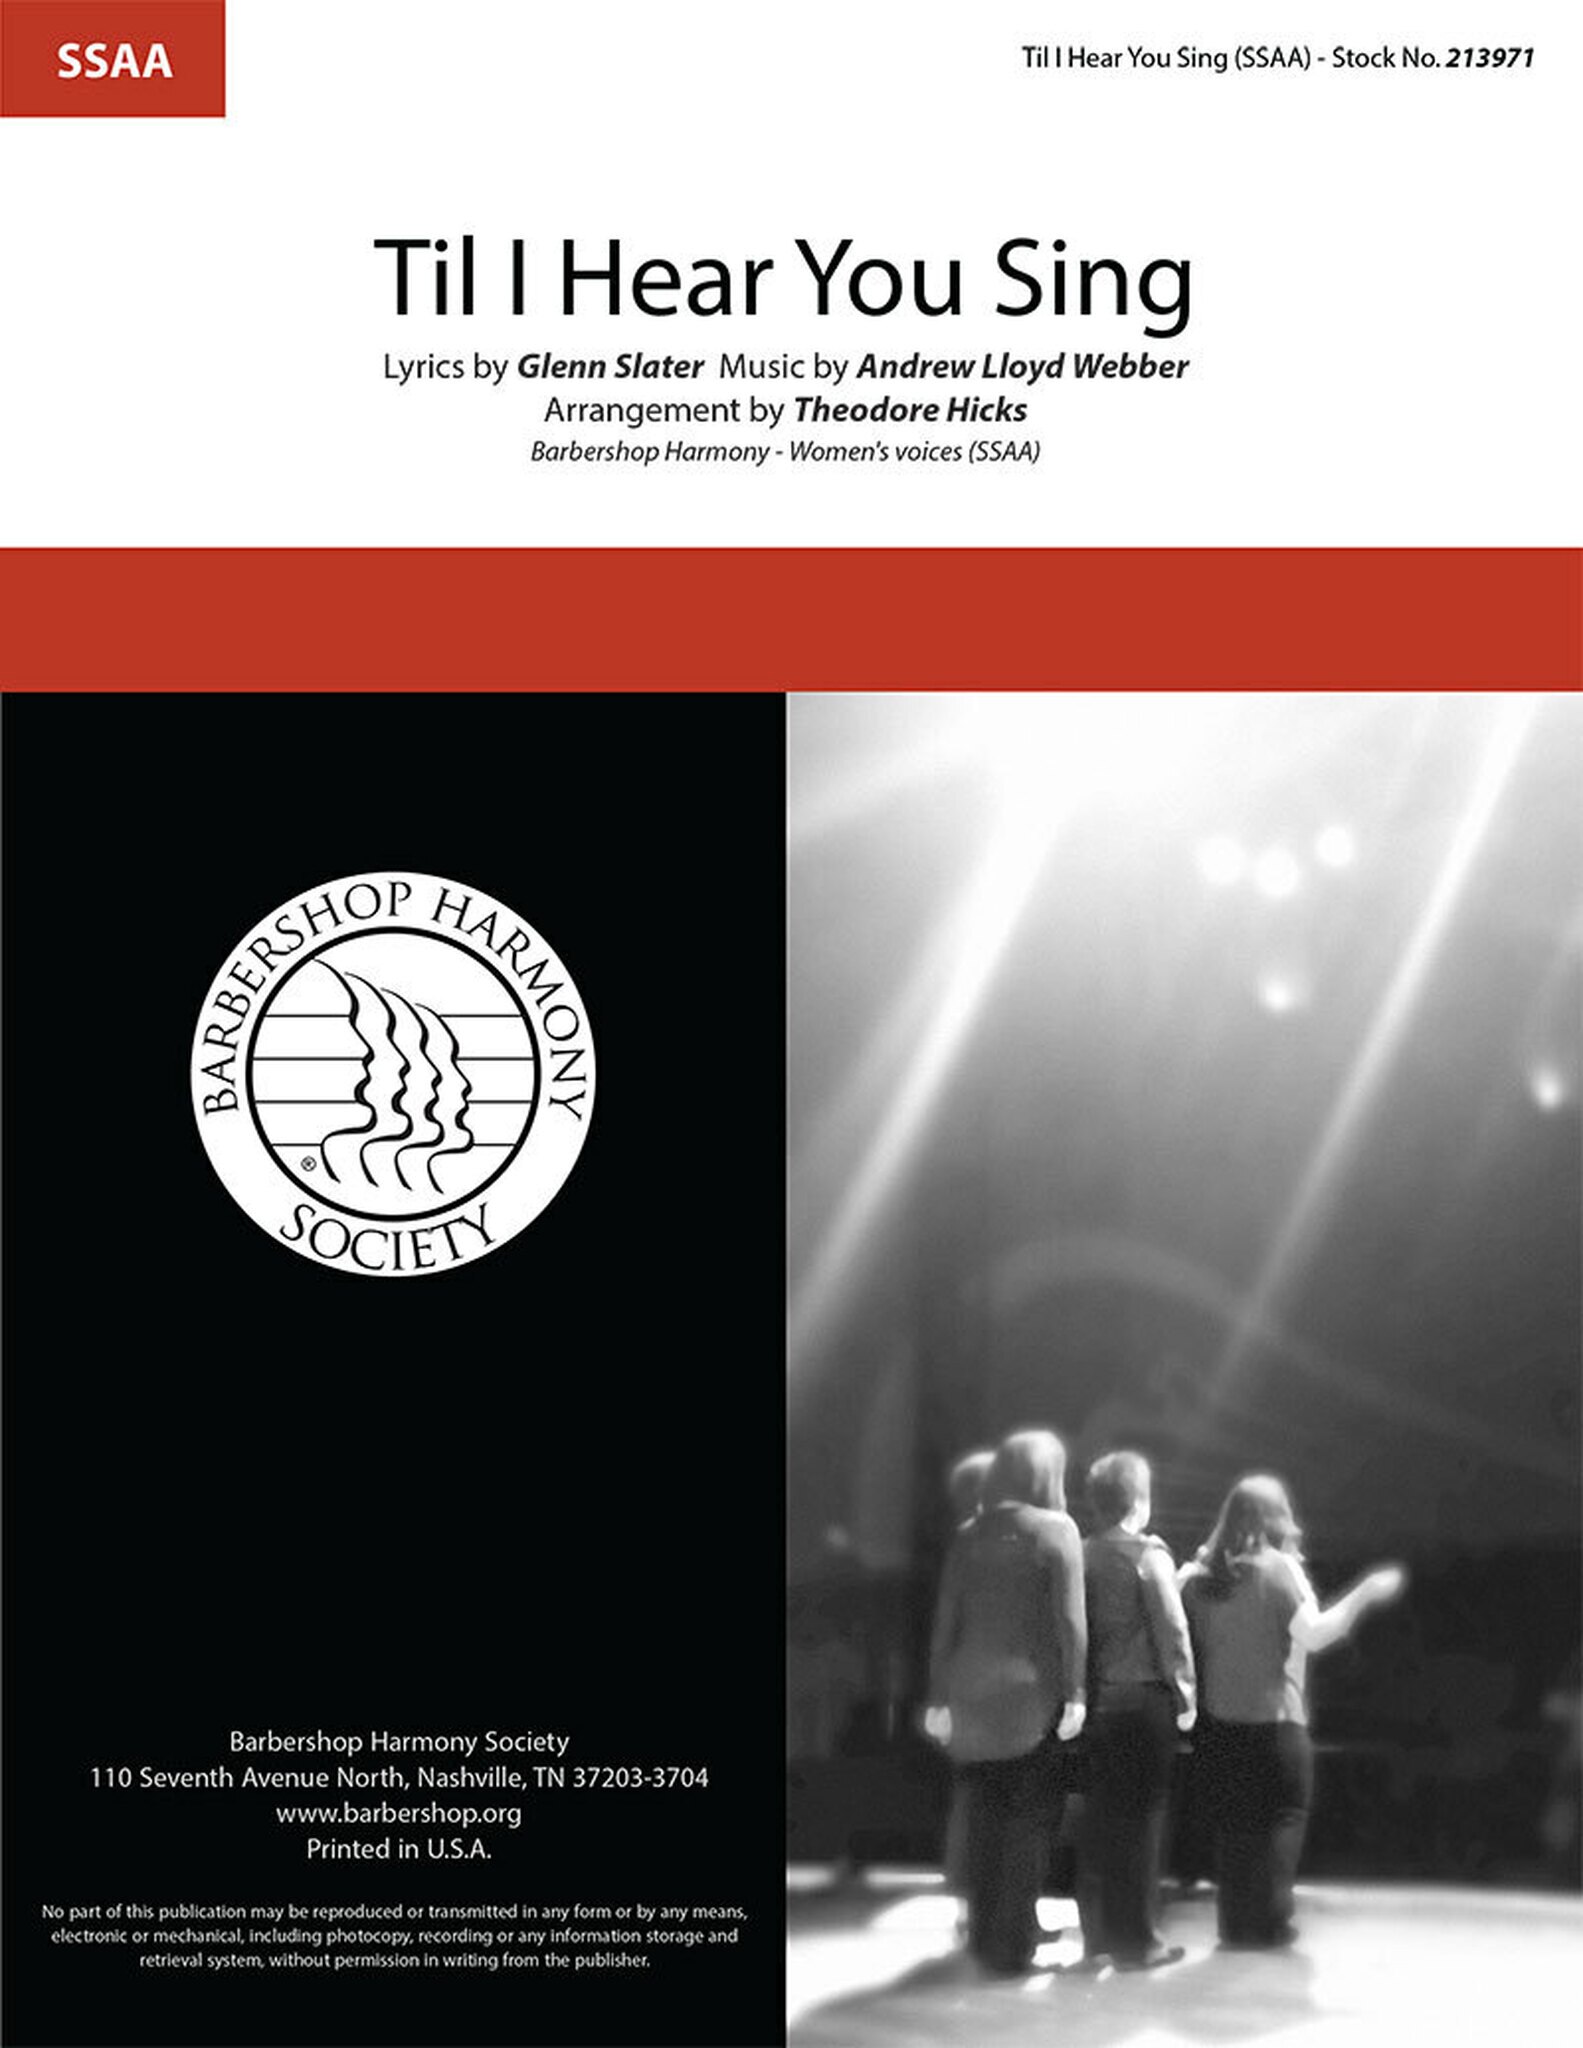 'Til I Hear You Sing : SSAA : Theo Hicks : Love Never Dies : Sheet Music : 00363317